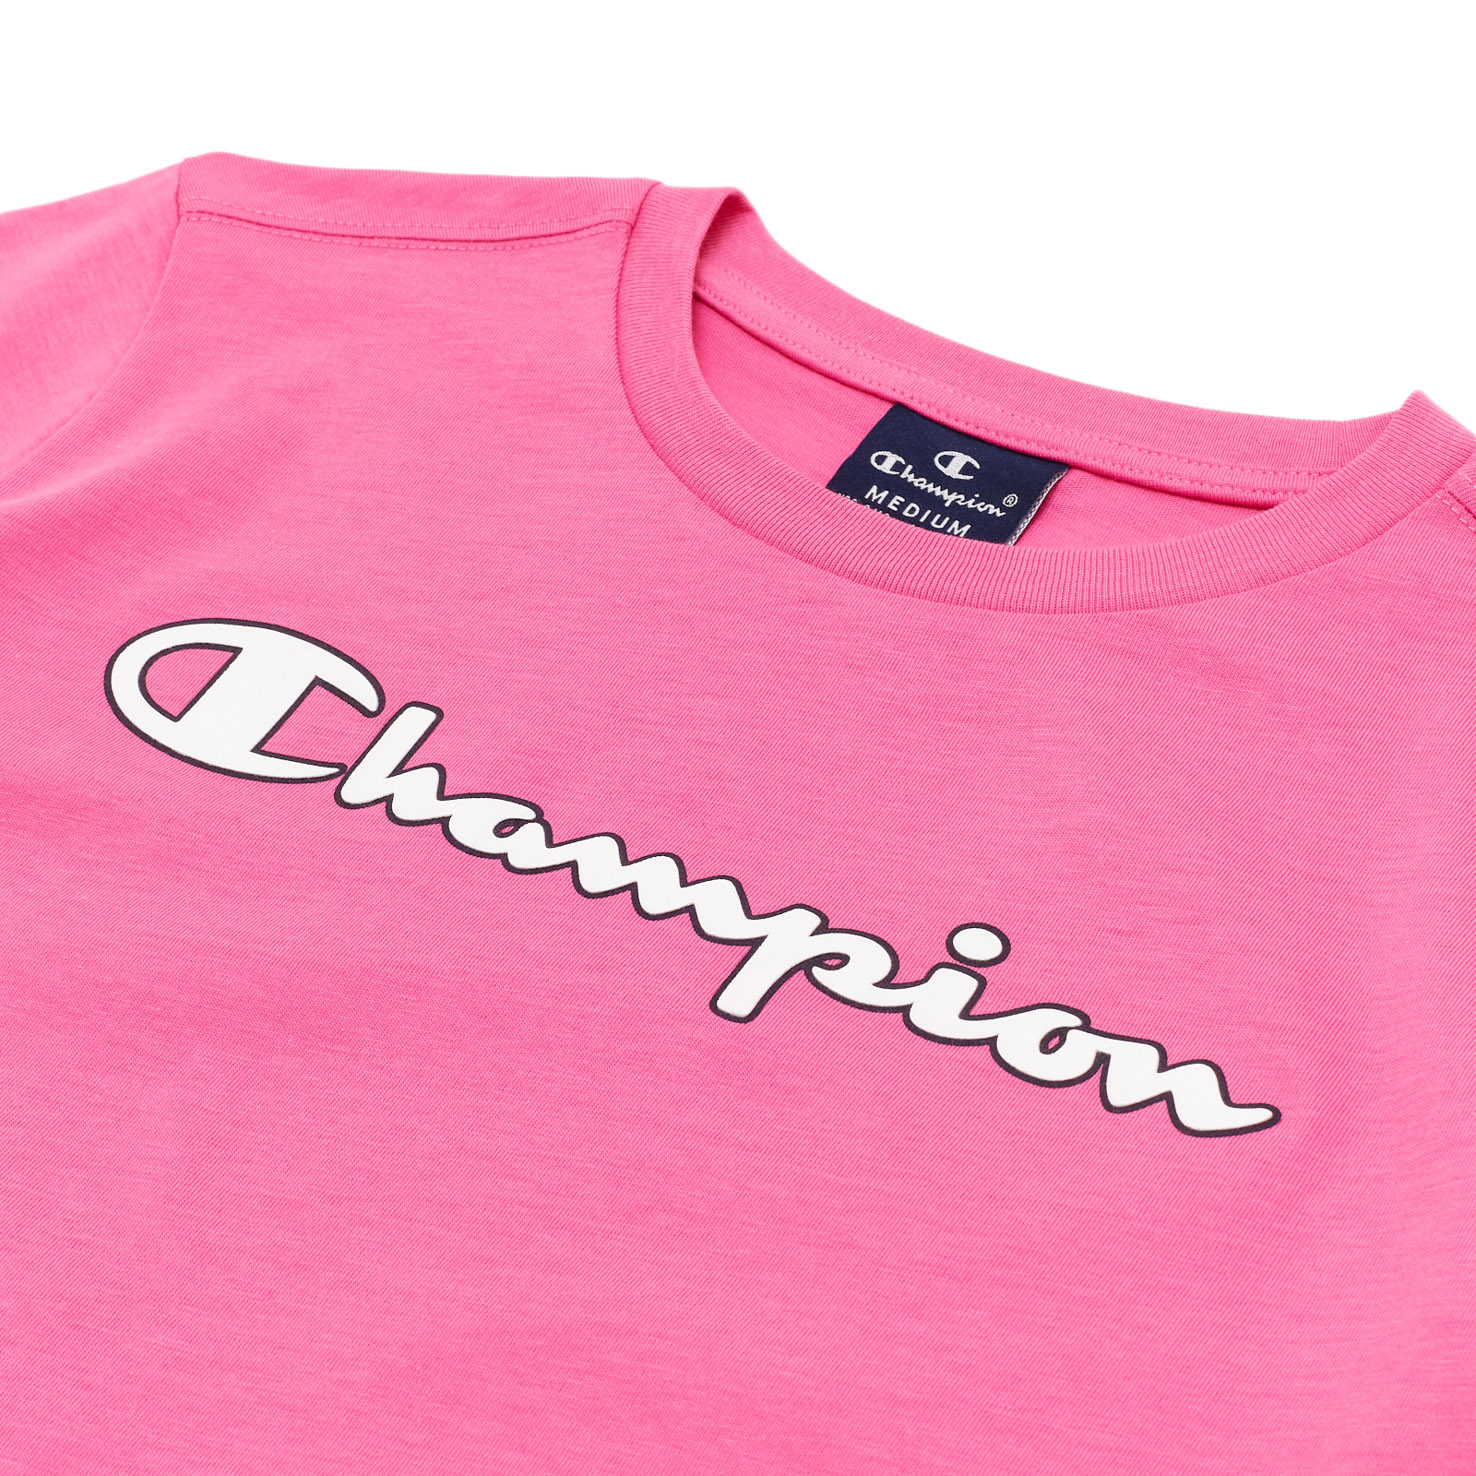 T-SHIRTS CHAMPION, размер L, цвет розовый CH305702 - фото 3